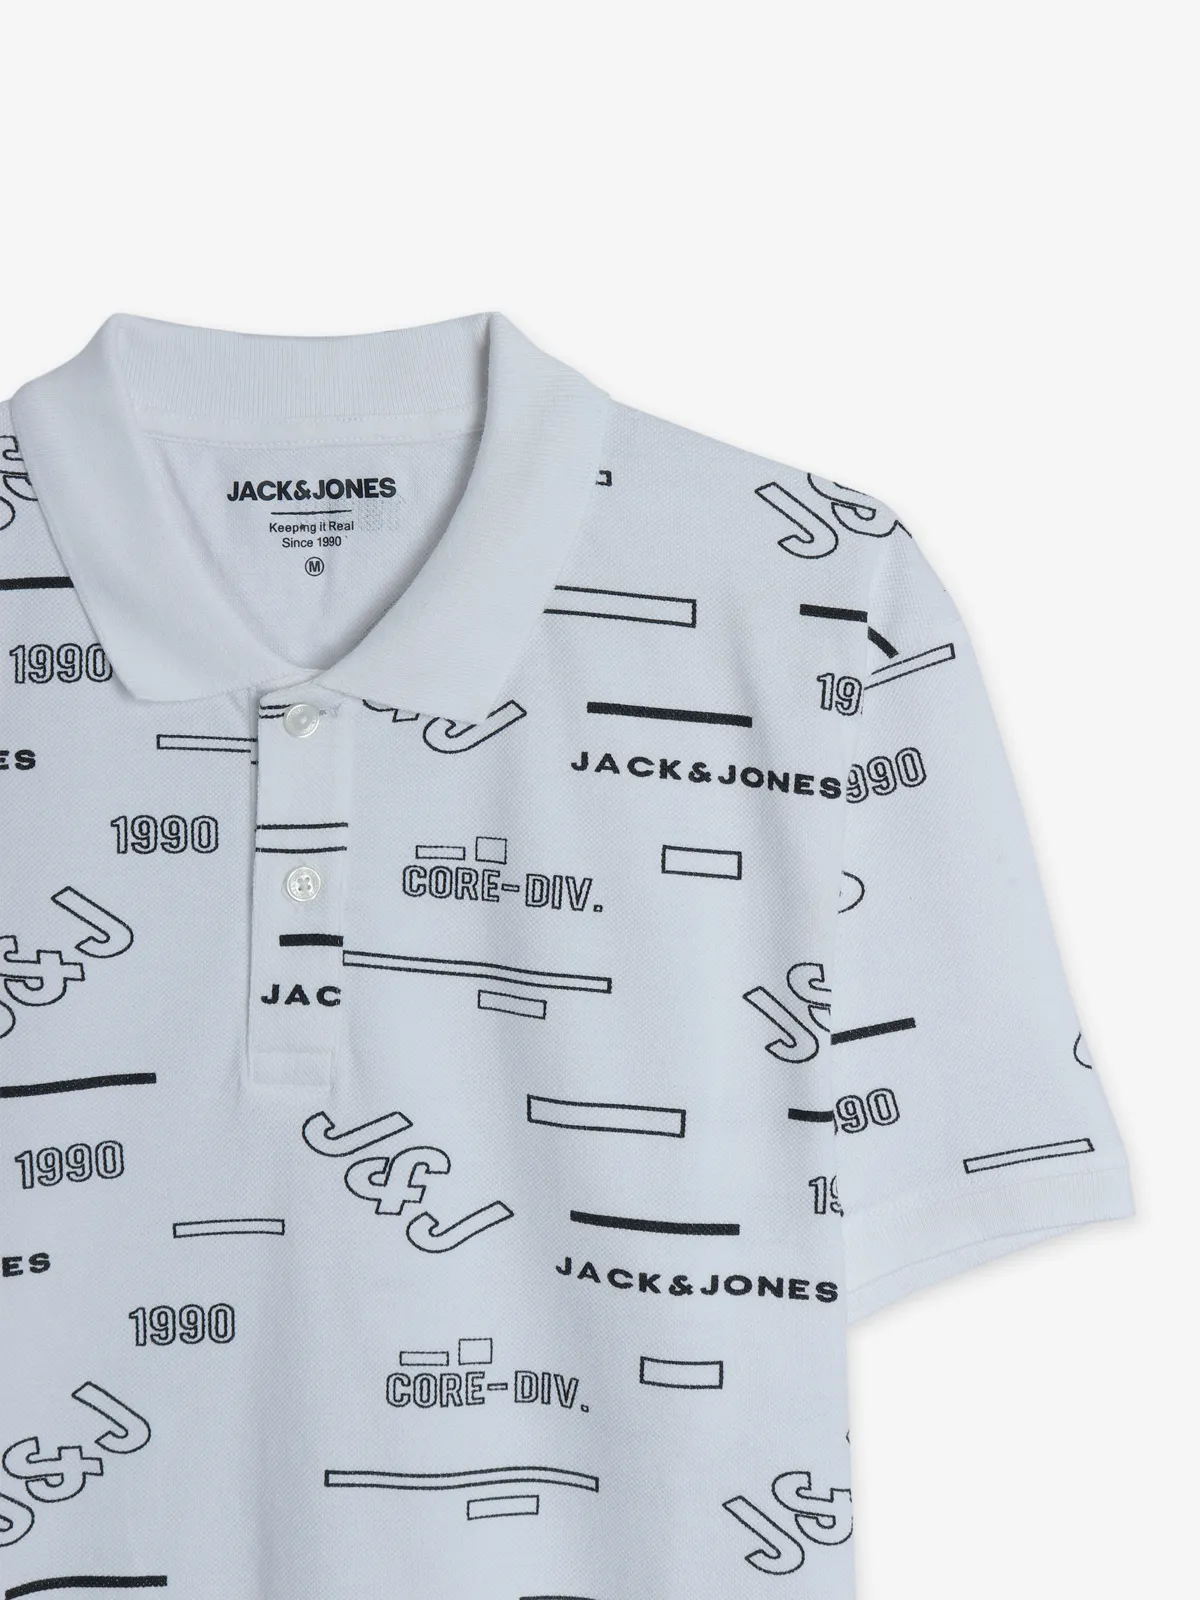 JACK&JONES white printed polo t shirt